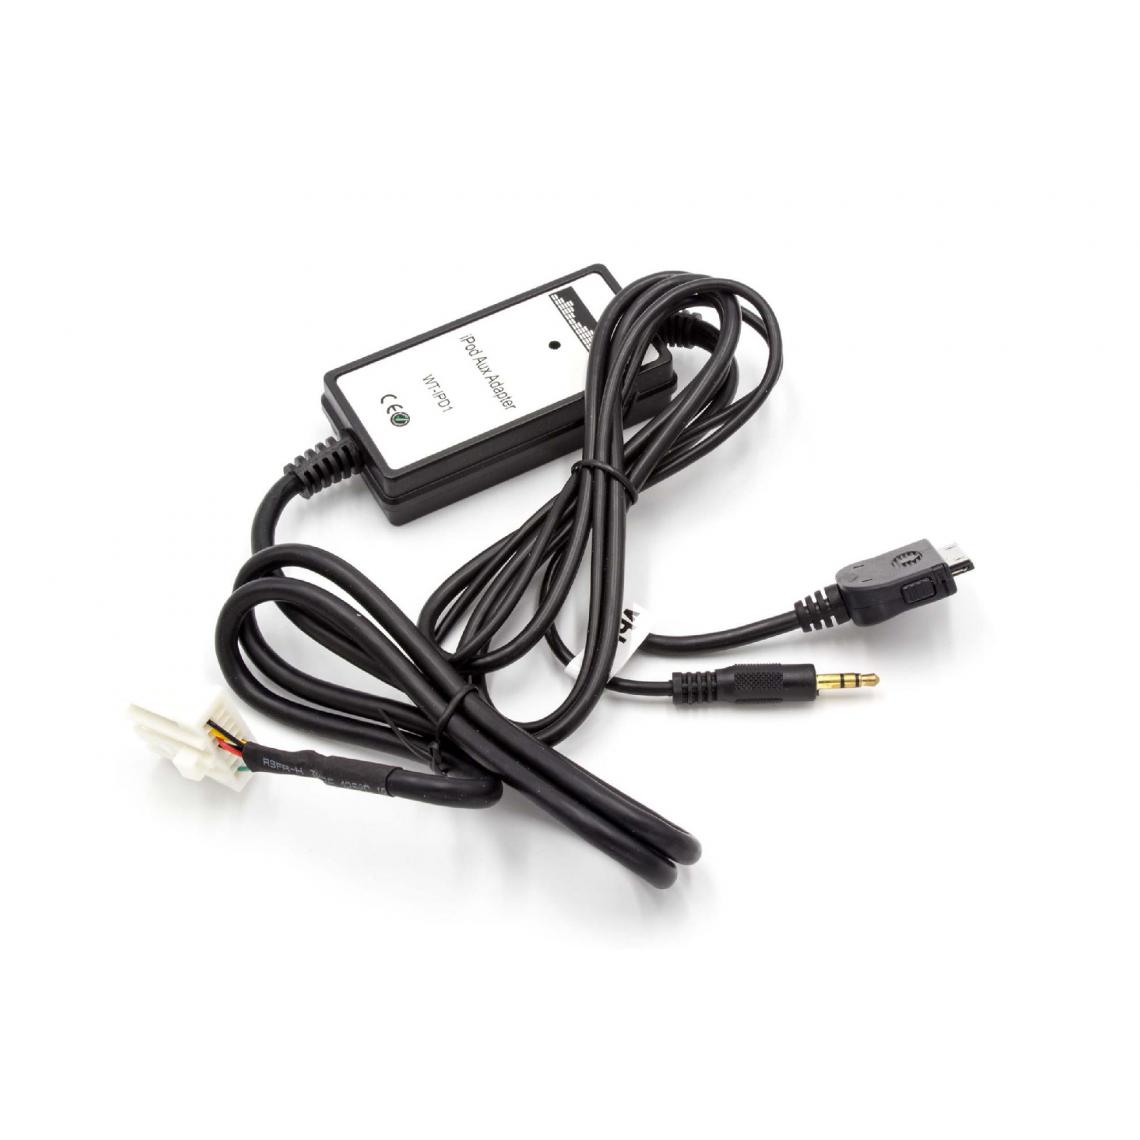 Vhbw - vhbw Câble adaptateur autoradio compatible avec Mazda / Apple, par exemple Apple Ipad 1, 2 - Alimentation modulaire